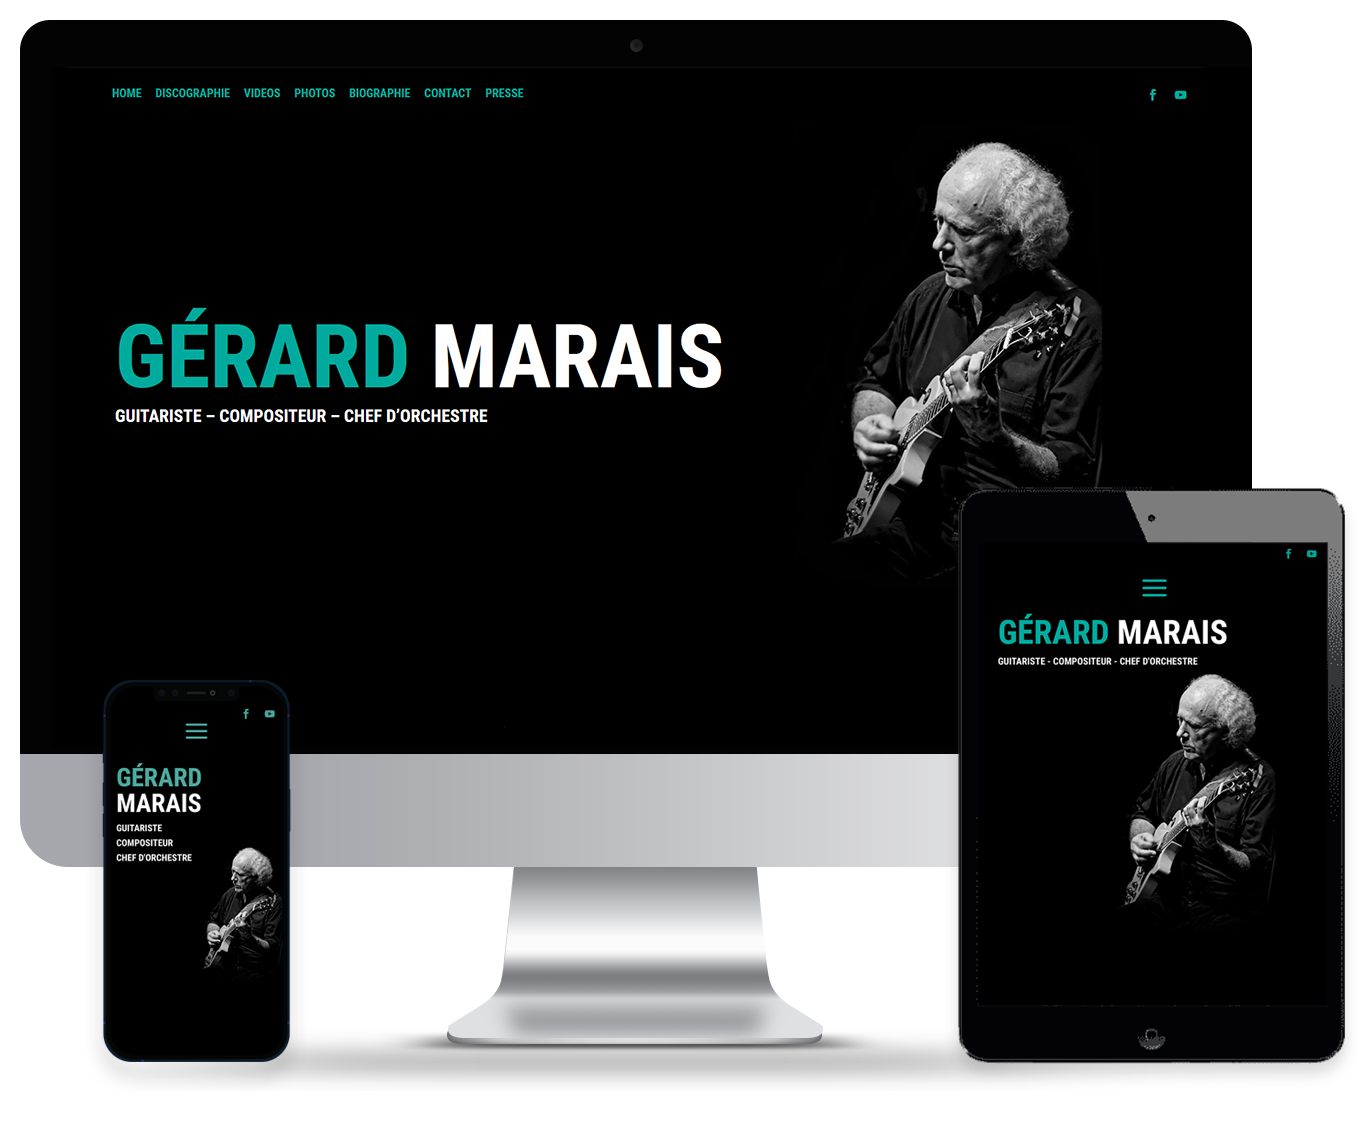 Gérard Marais, Guitariste, compositeur